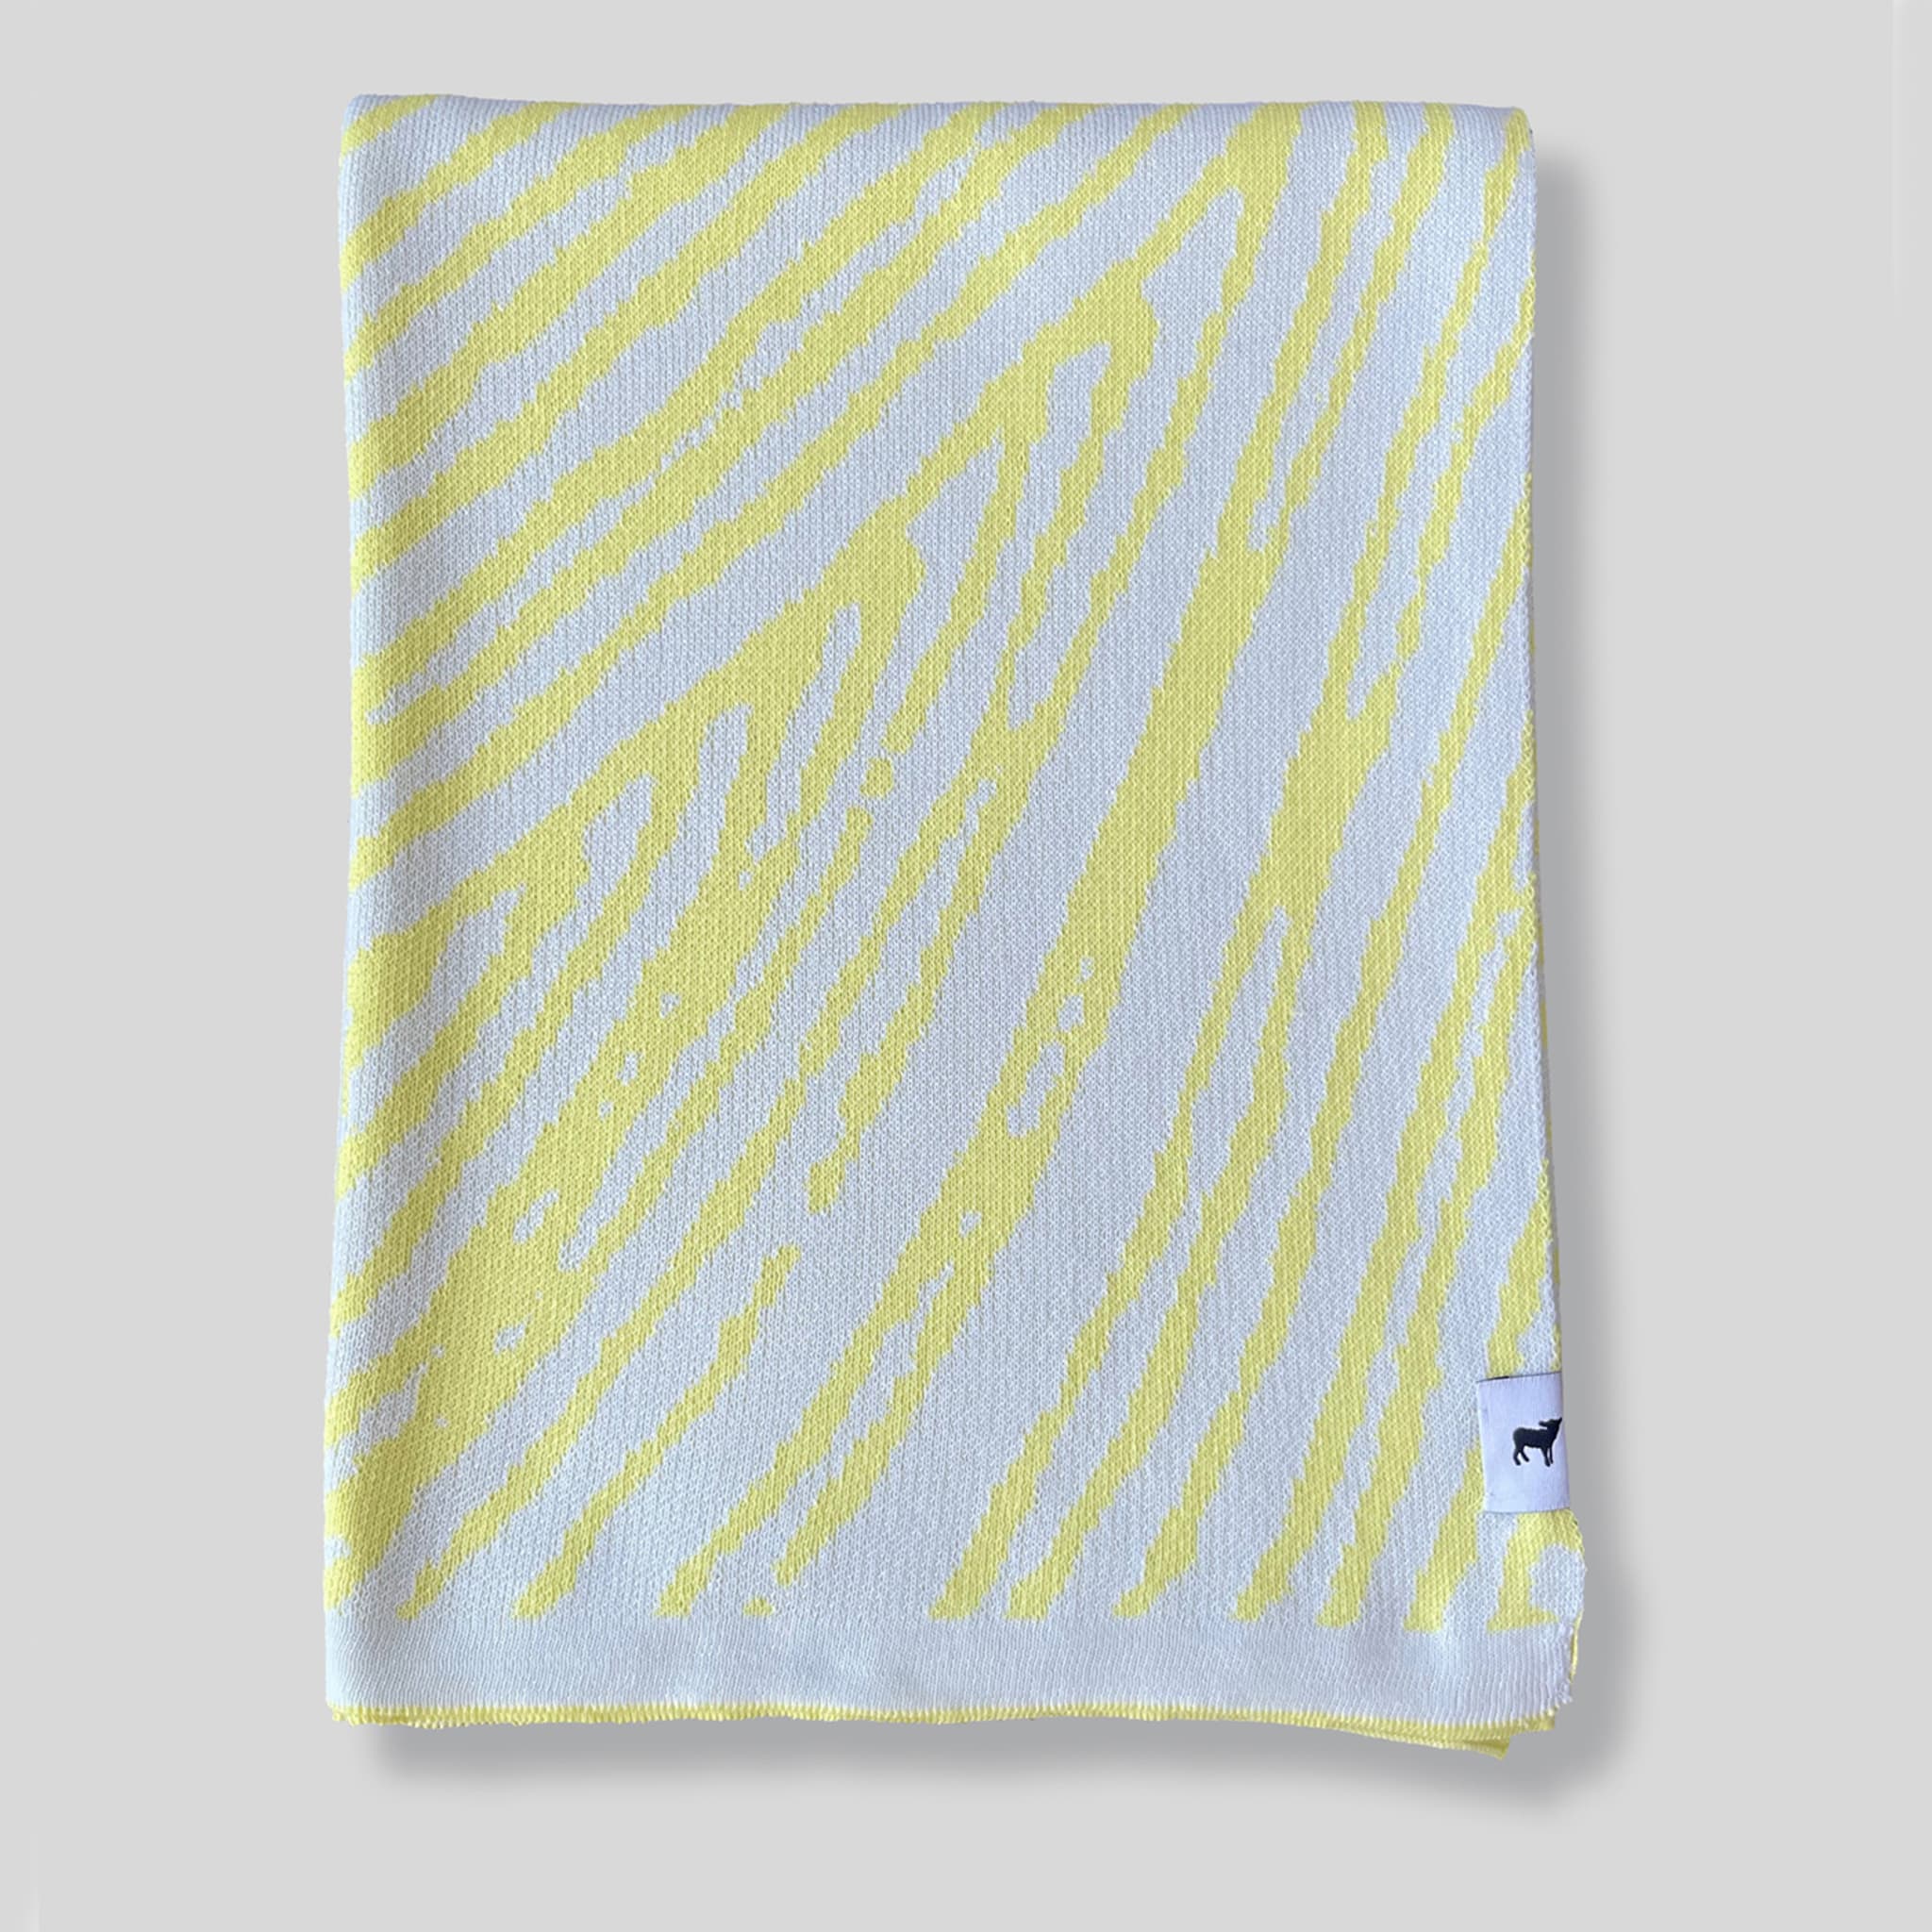 Tratto Bio Neon-Yellow & White Blanket by Emilio Salvatore Leo - Alternative view 5